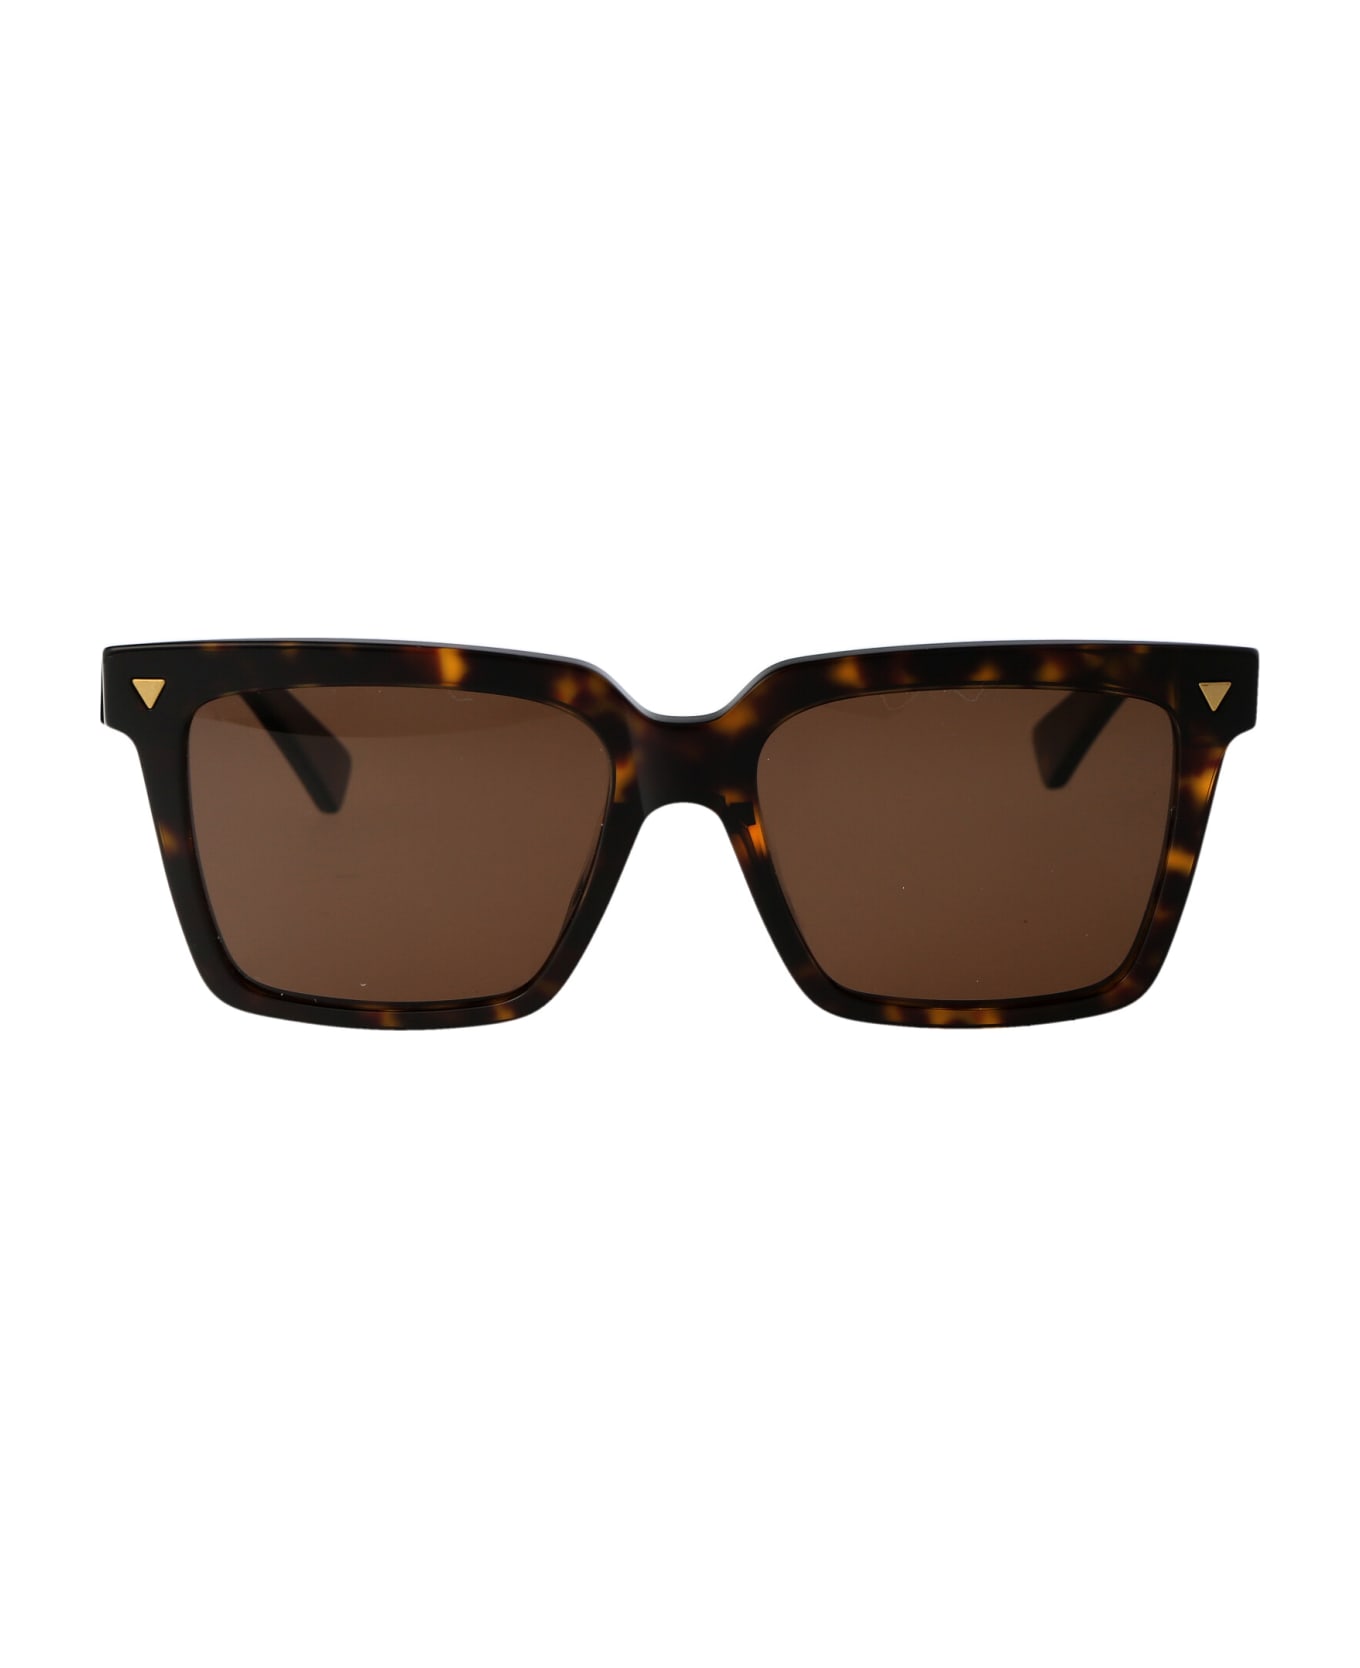 Bottega Veneta Eyewear Bv1254s Sunglasses - 002 HAVANA HAVANA BROWN サングラス